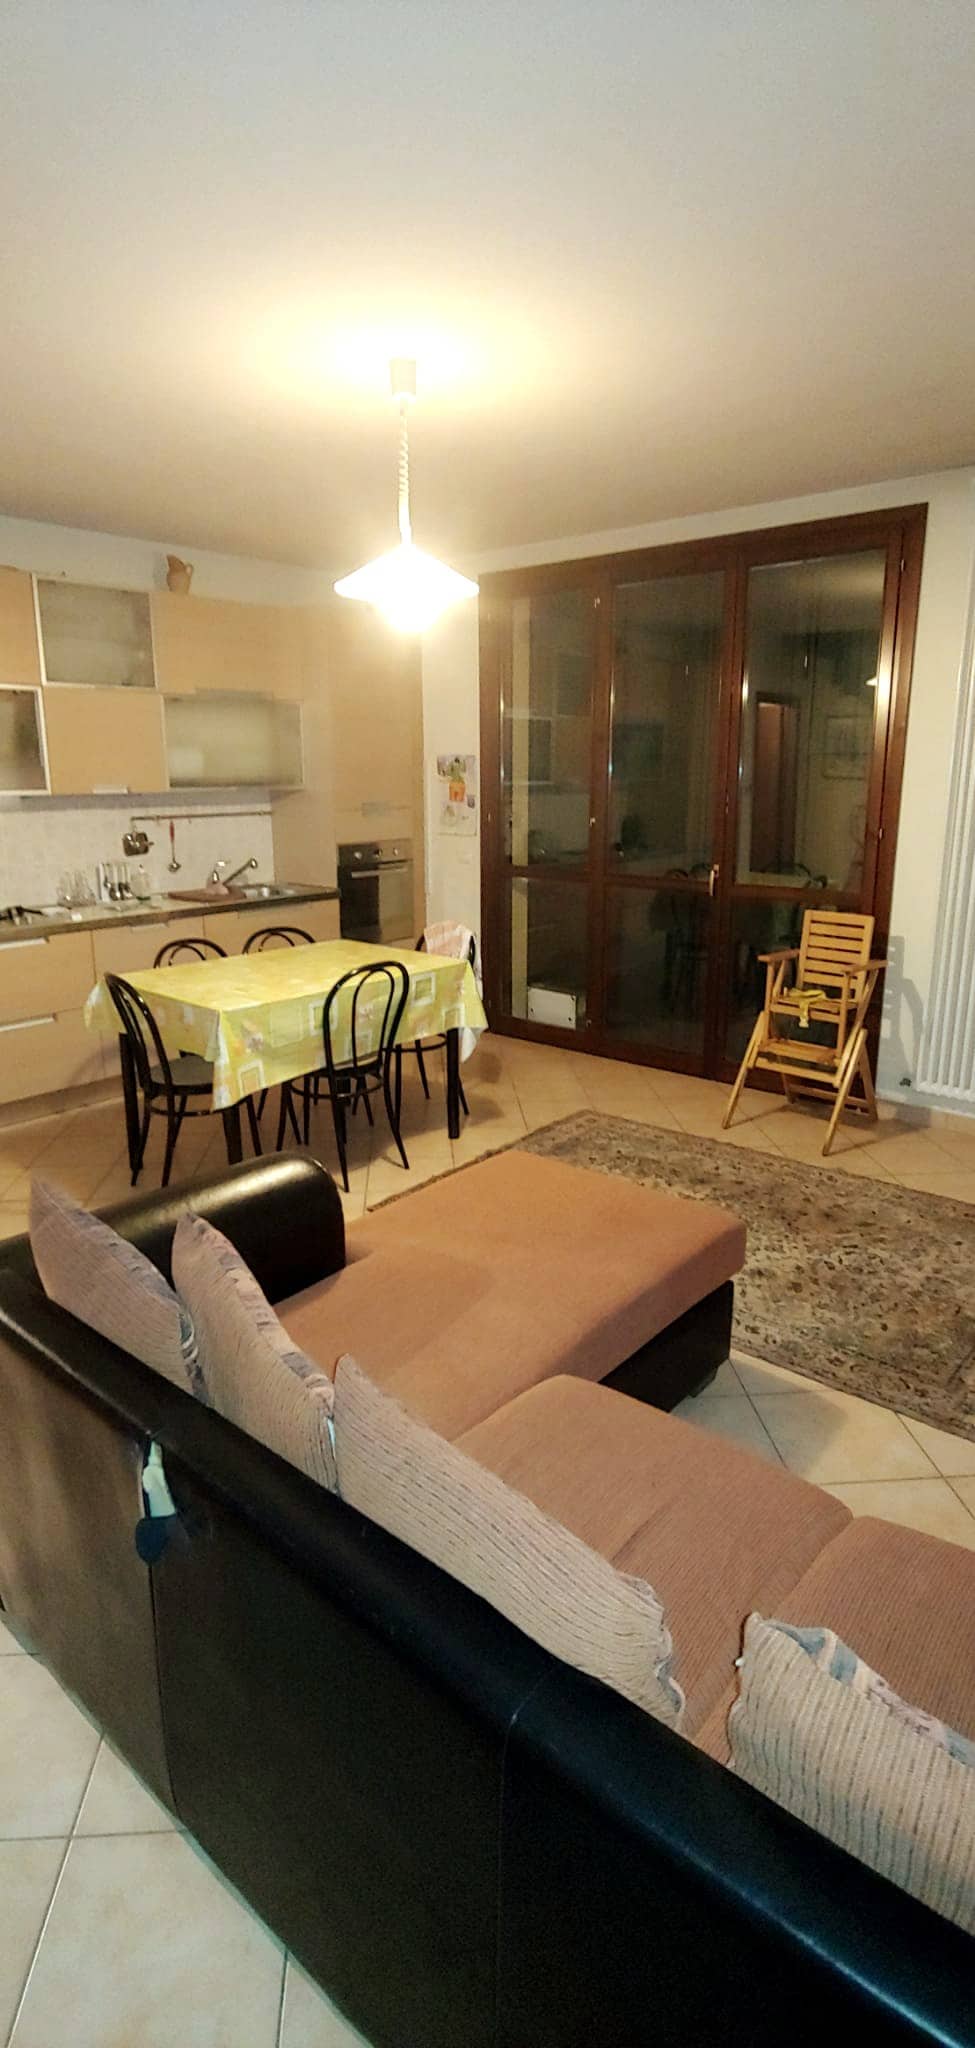 Guastalla : locations de vacances et logements - Emilie-Romagne, Italie |  Airbnb